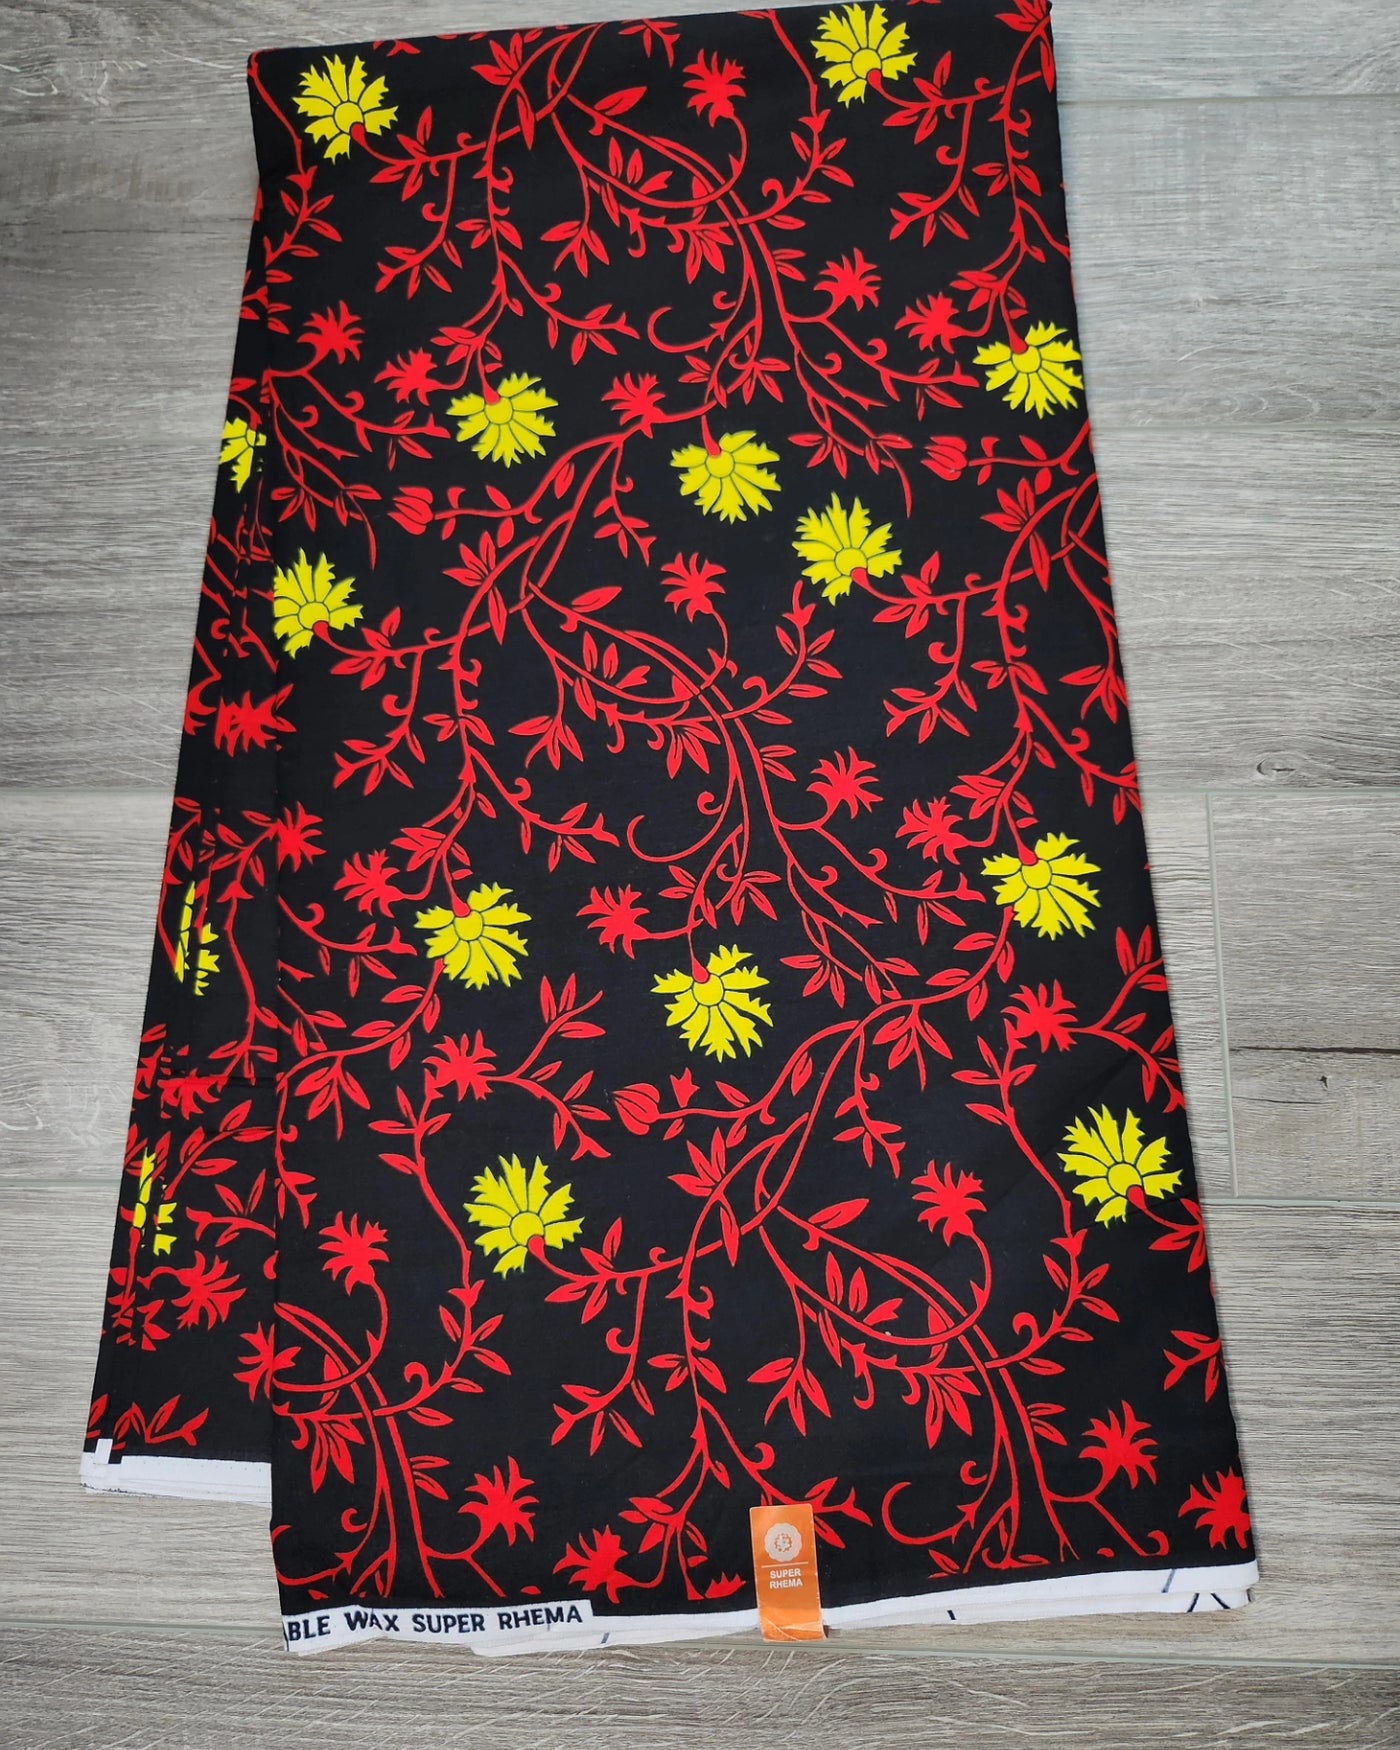 Black and Red African Print Fabric, Ankara Fabric